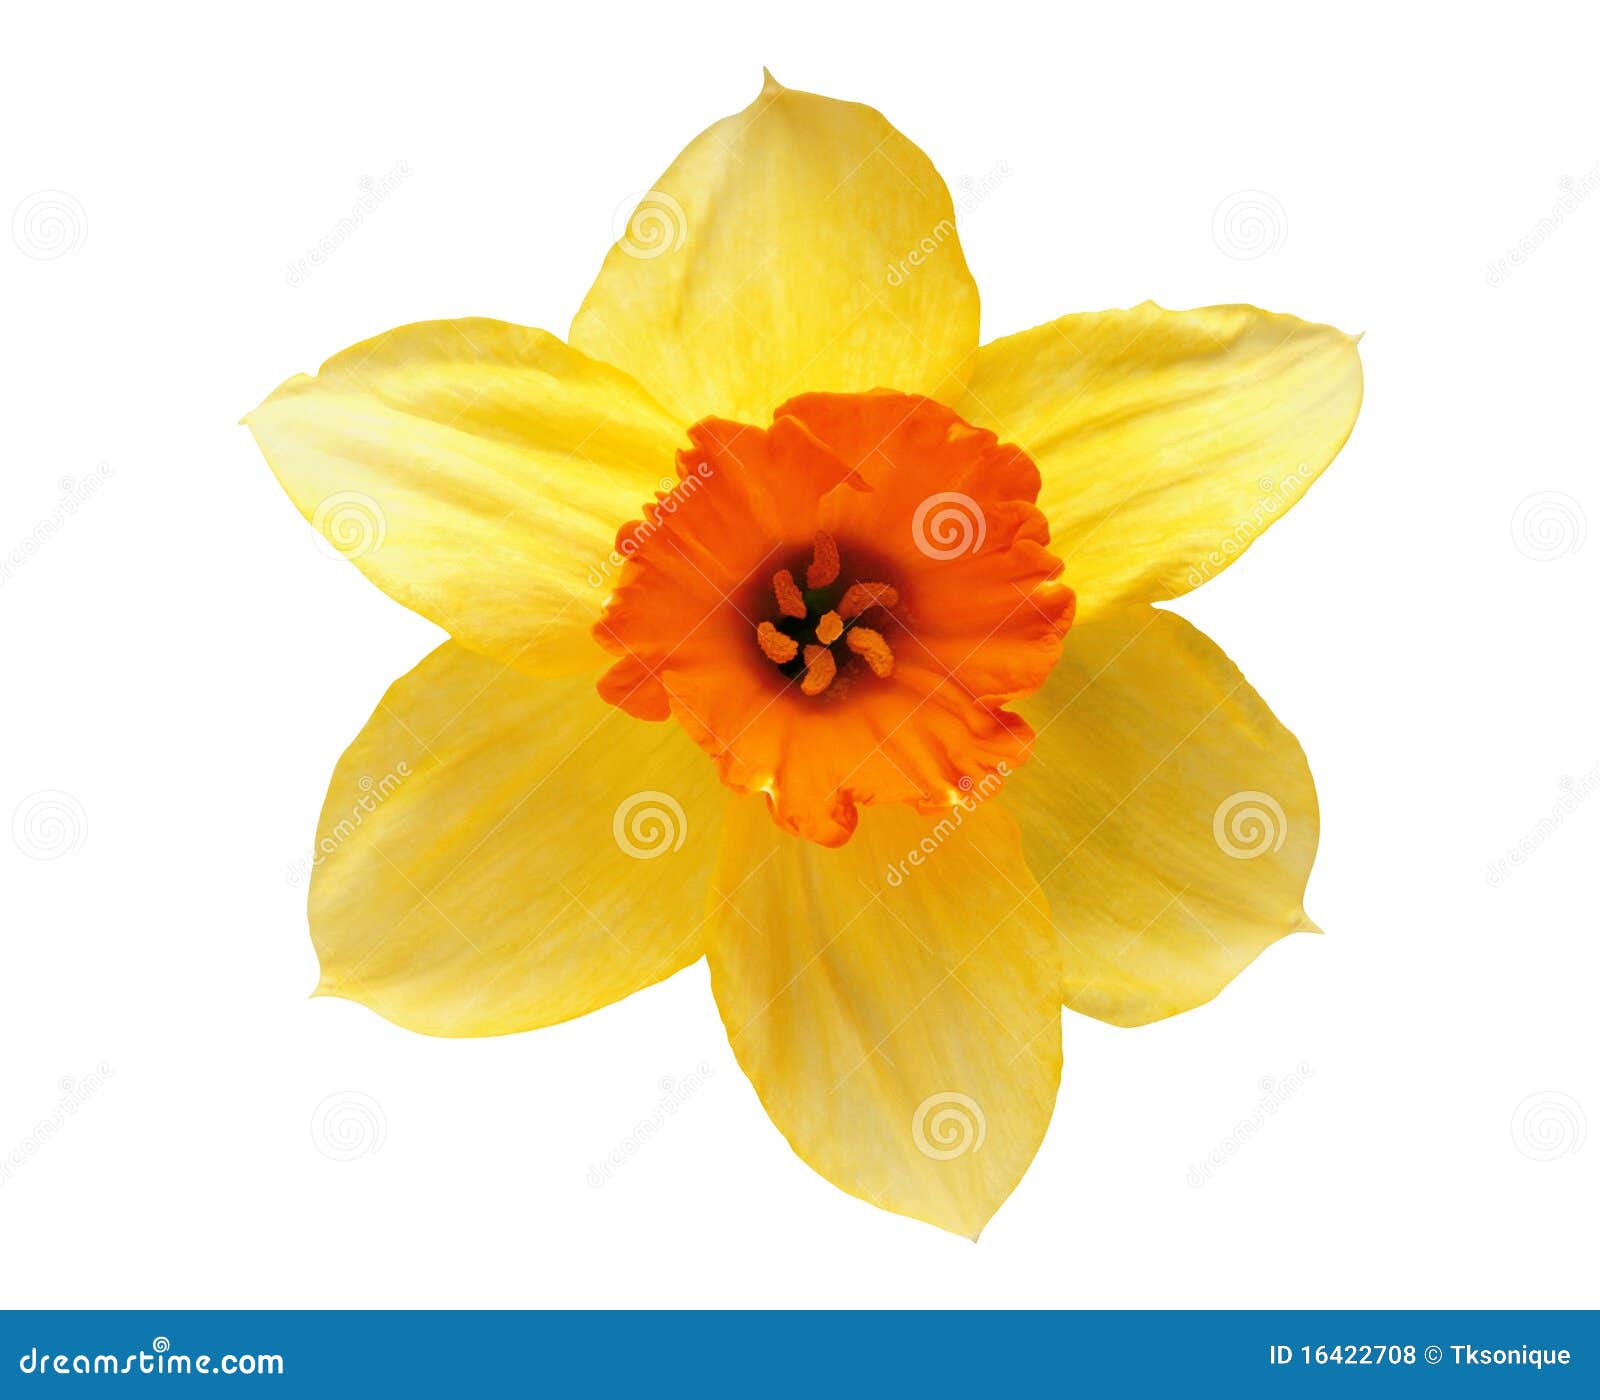 Studio Shot of Yellow and Orange Colored Daffodil Stock Photo - Image ...